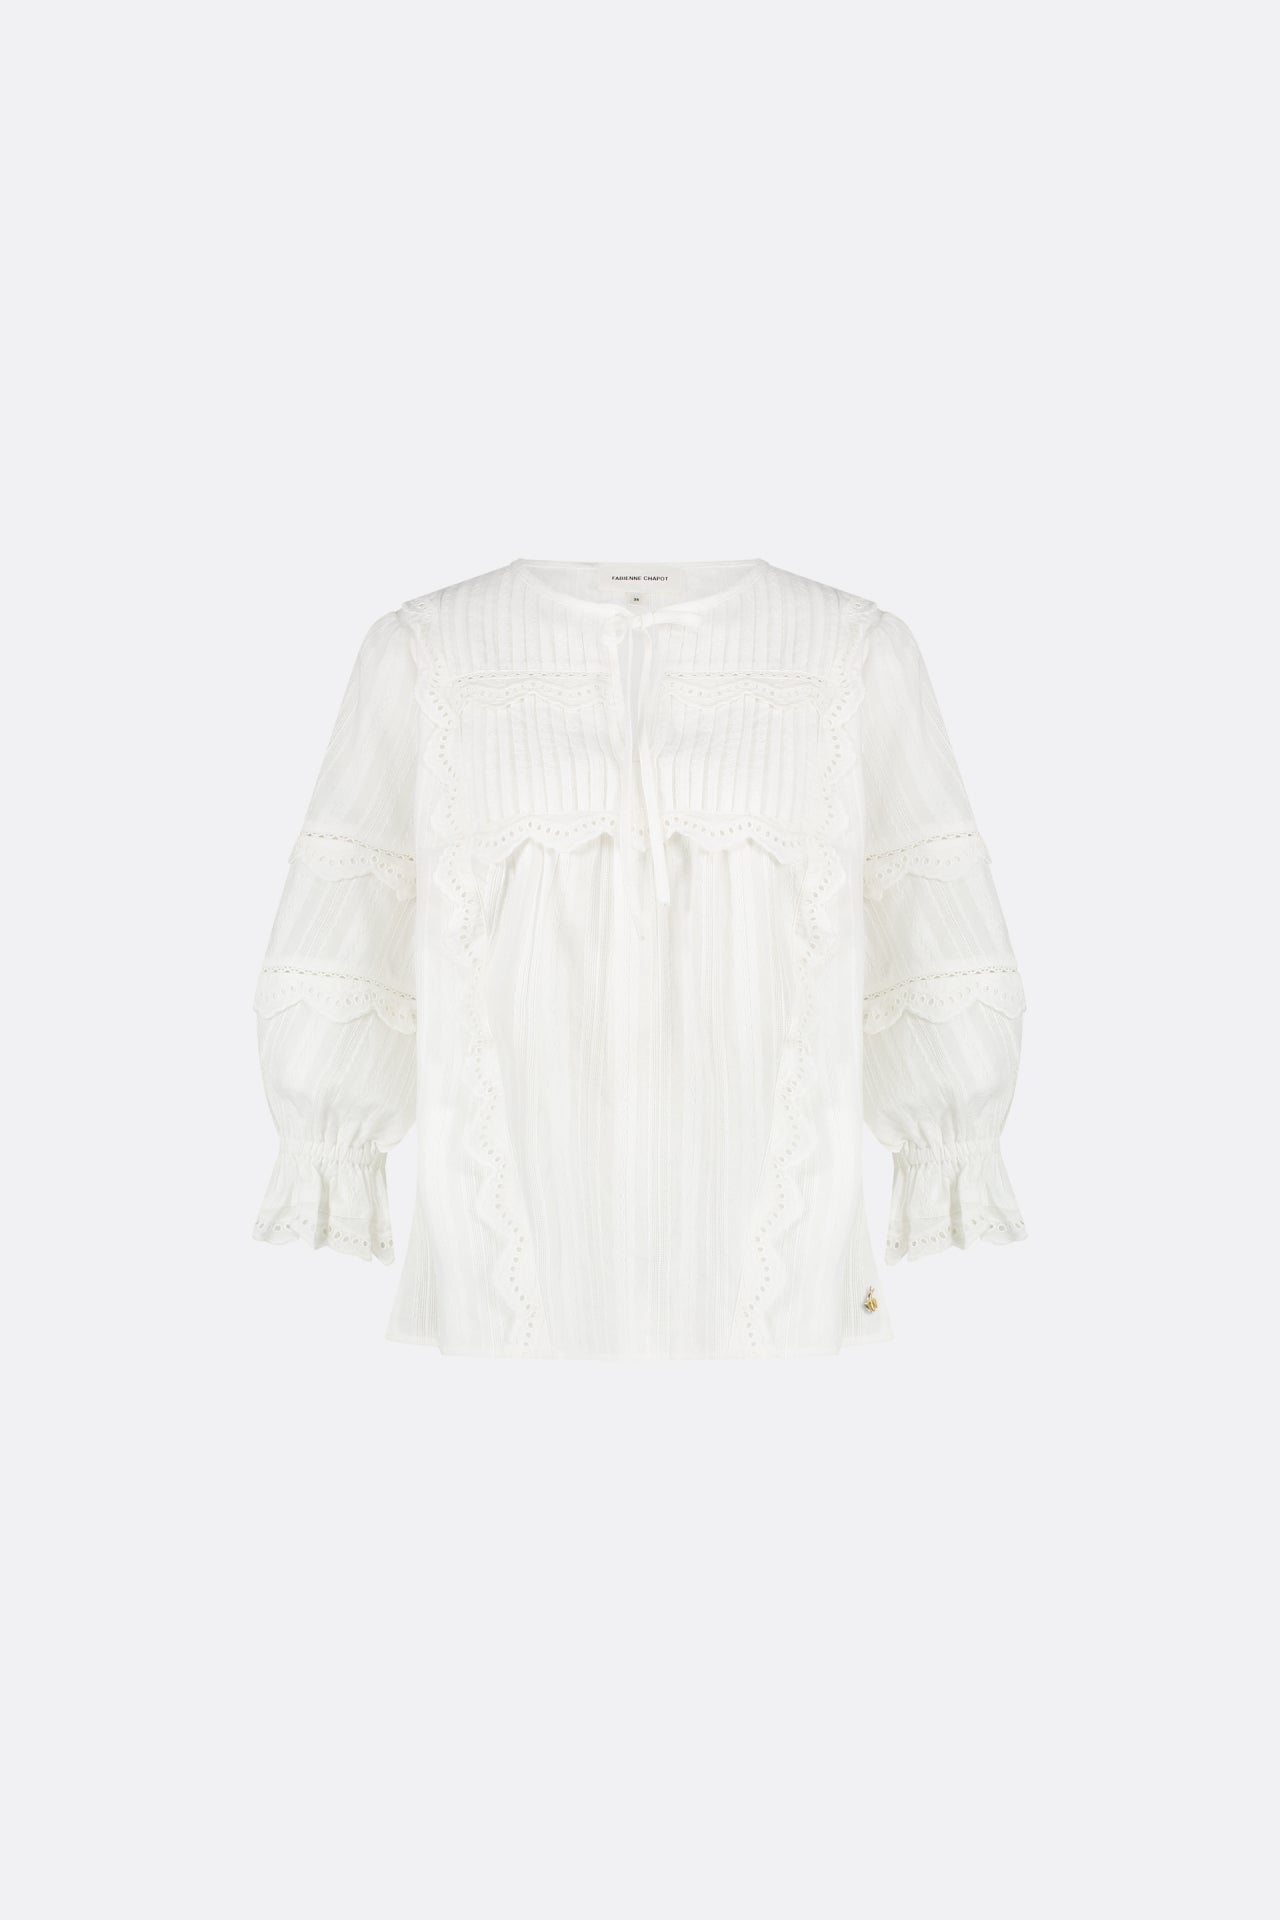 Lucia Short Sleeve Top | Cream White